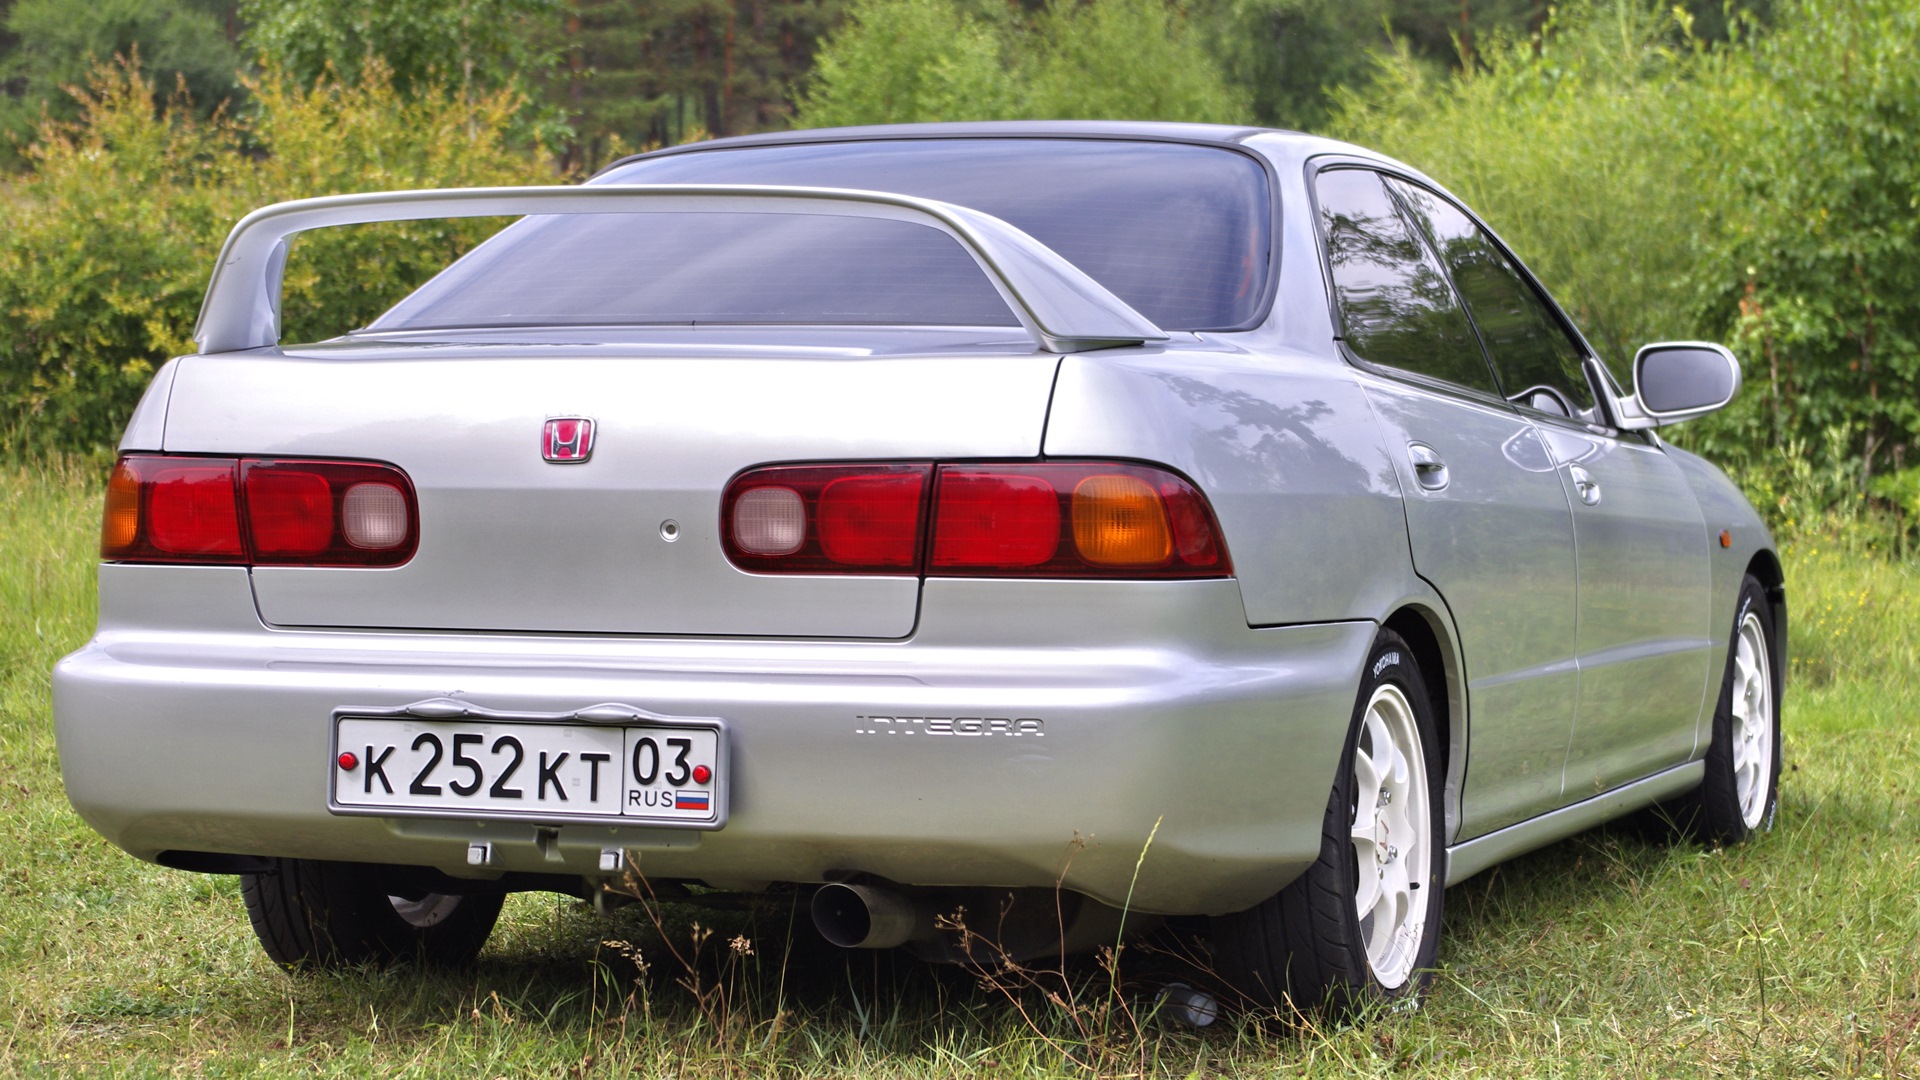 Honda 96 год. Хонда Интегра 1996. Хонда Интегра 96. Акура Интегра 2023. Хонда Интегра, 1996 серебристый цвет.